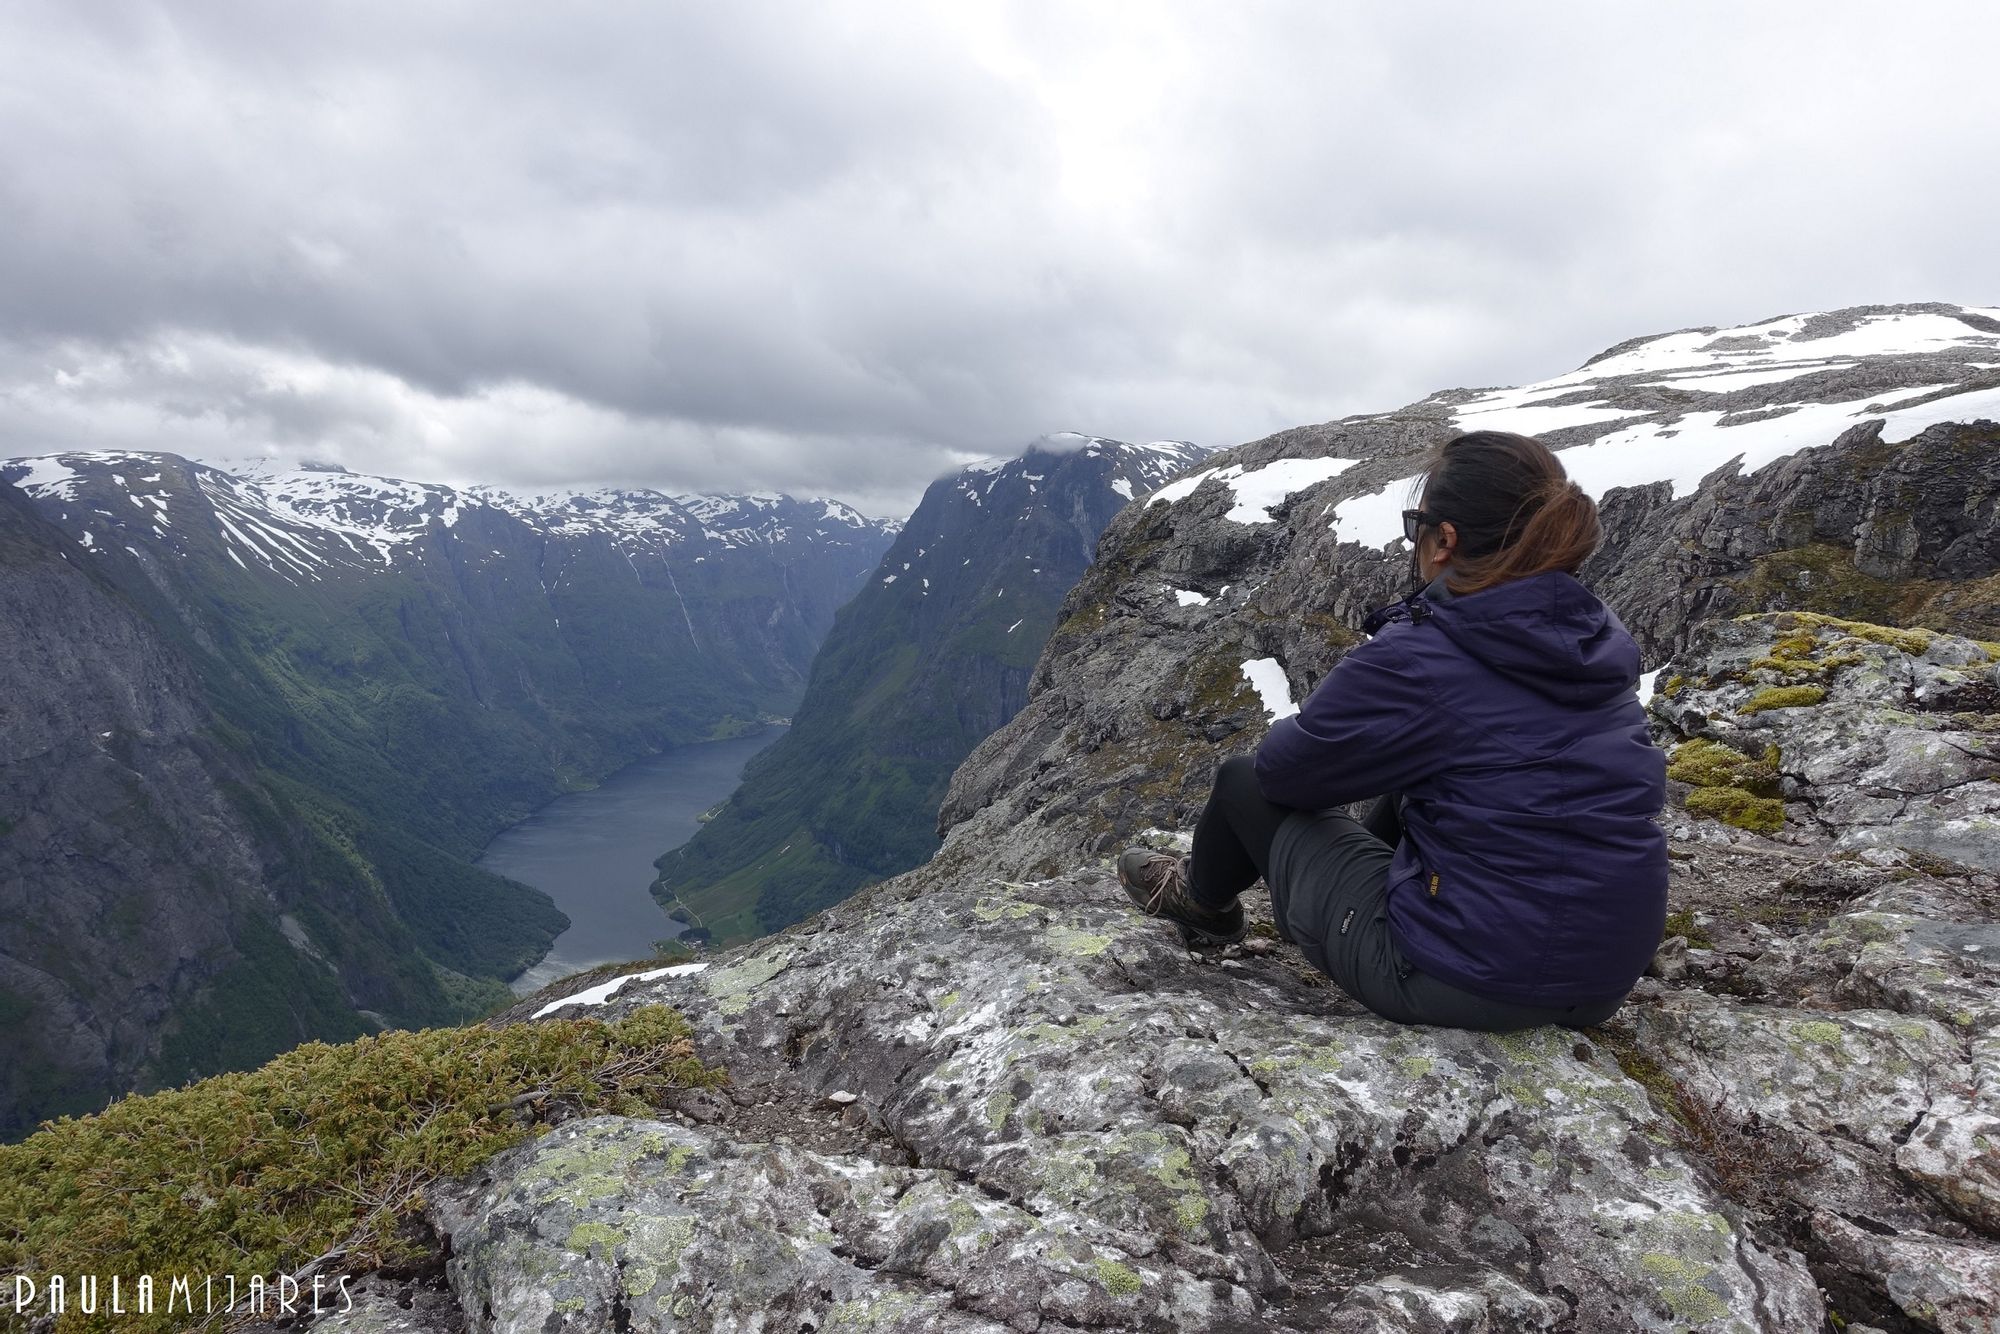 Freedom to Roam | Paula Mijares on her Norwegian Adventure